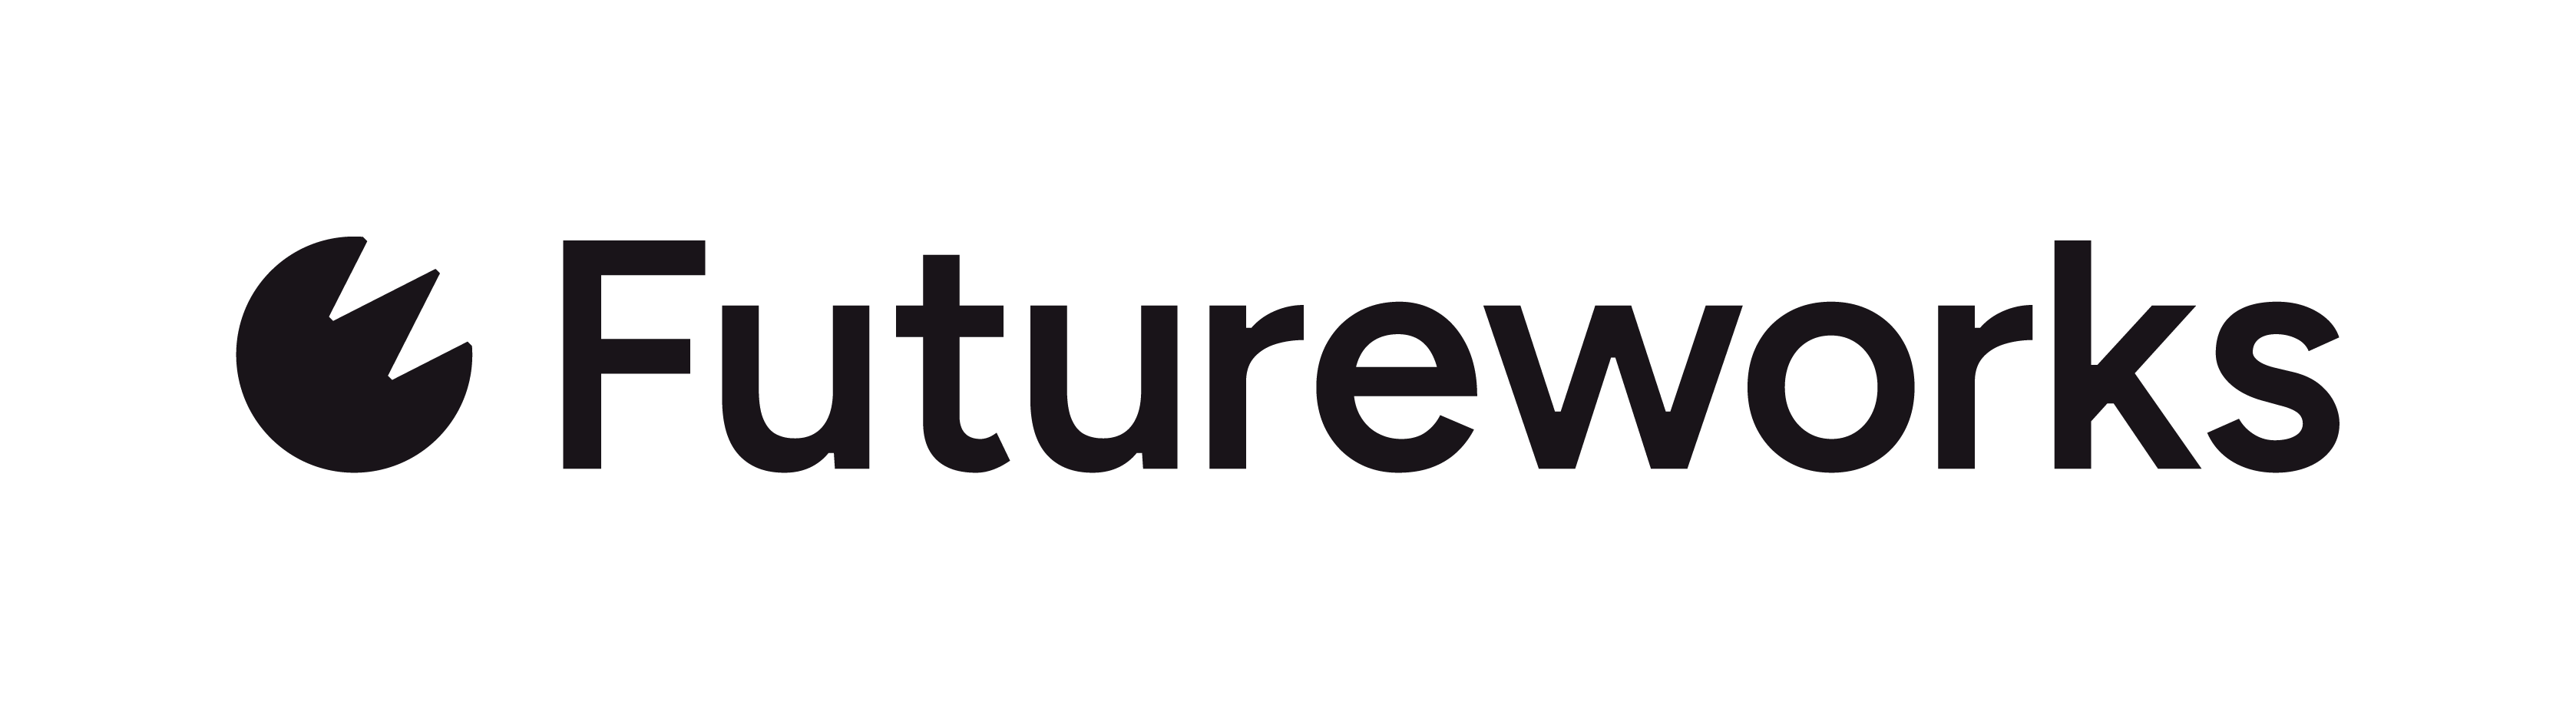 Futureworks Booking System - Registration